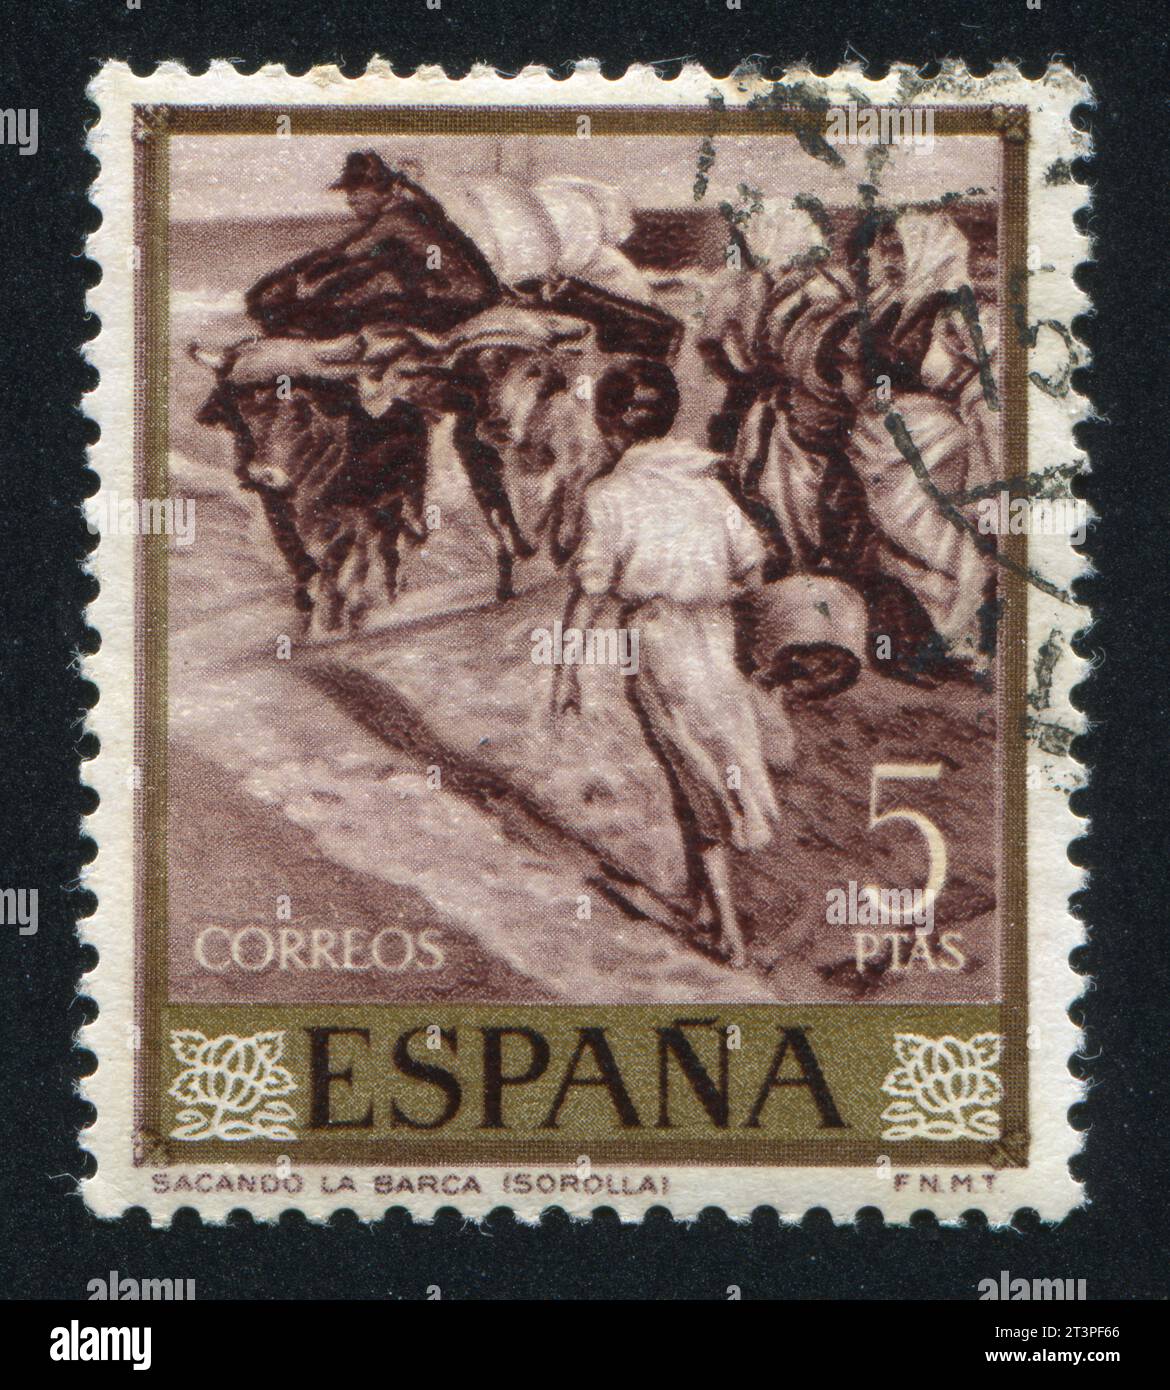 ESPAGNE - CIRCA 1964 : timbre imprimé par l'Espagne, montre l'extraction du bateau par Joaquin Sorolla, circa 1964 Banque D'Images